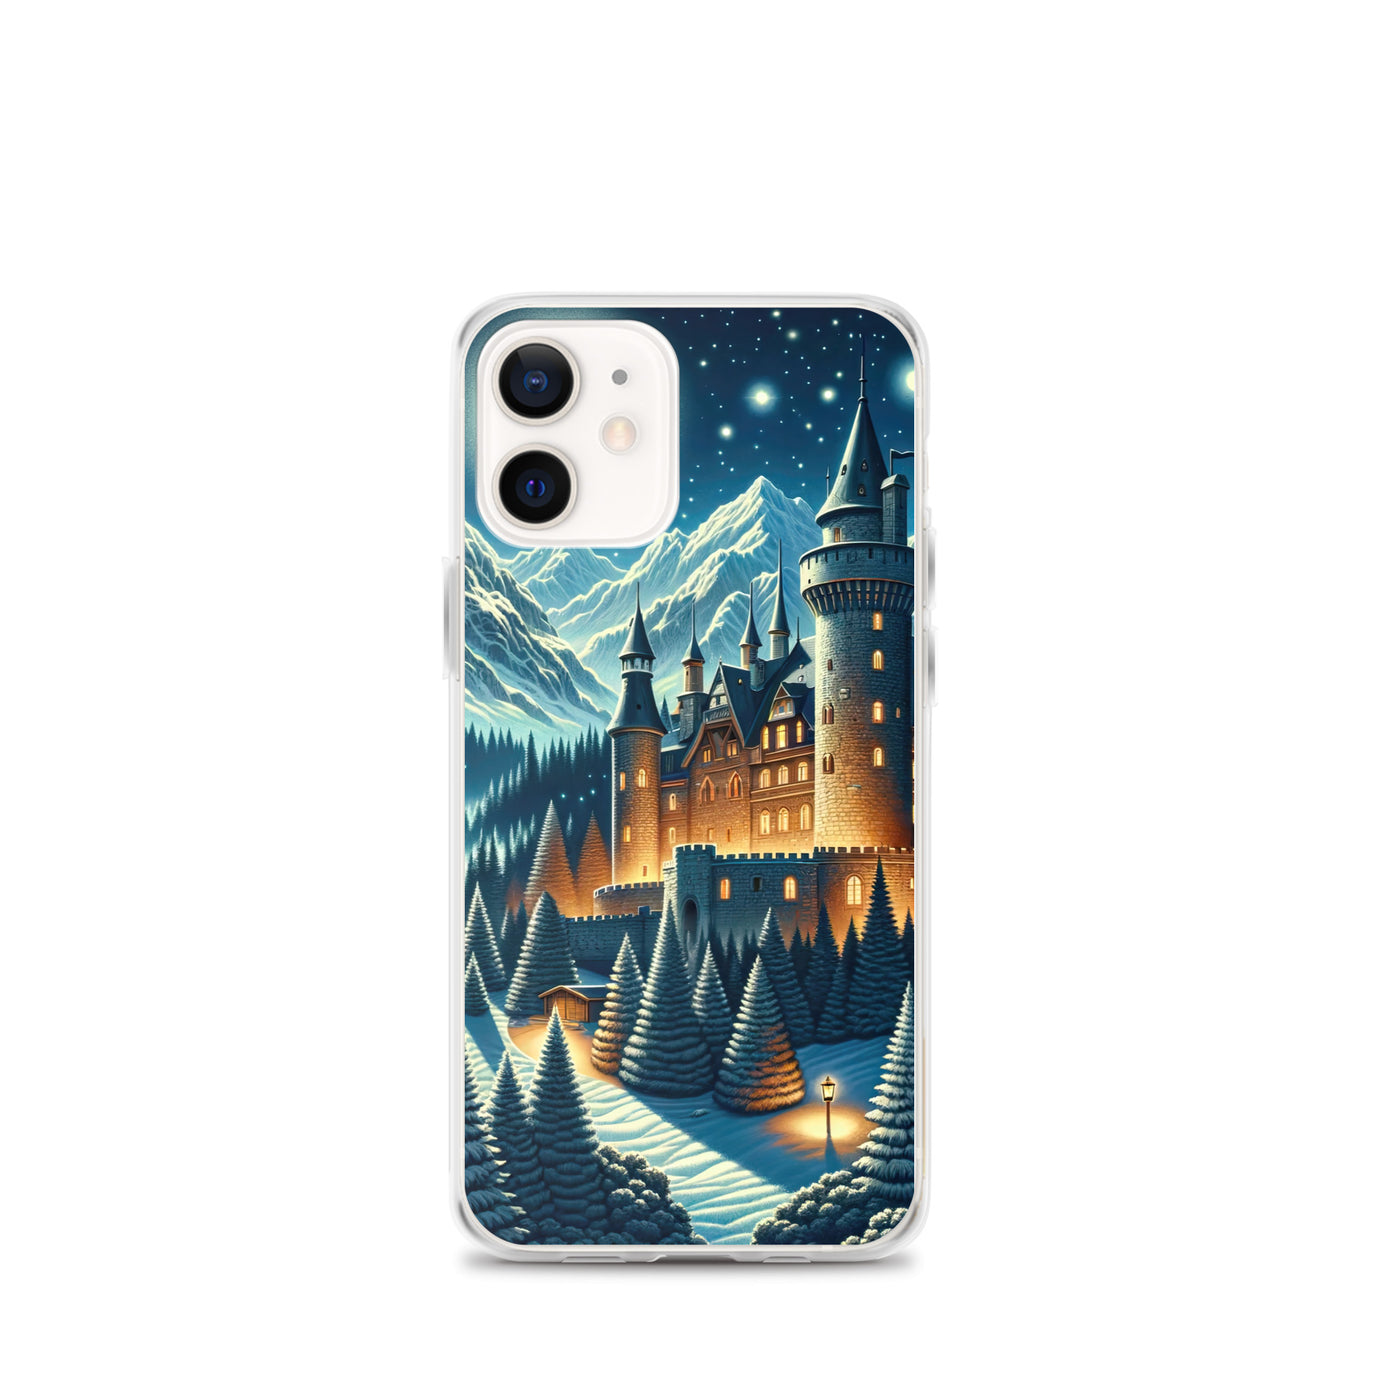 Mondhelle Schlossnacht in den Alpen, sternenklarer Himmel - iPhone Schutzhülle (durchsichtig) berge xxx yyy zzz iPhone 12 mini